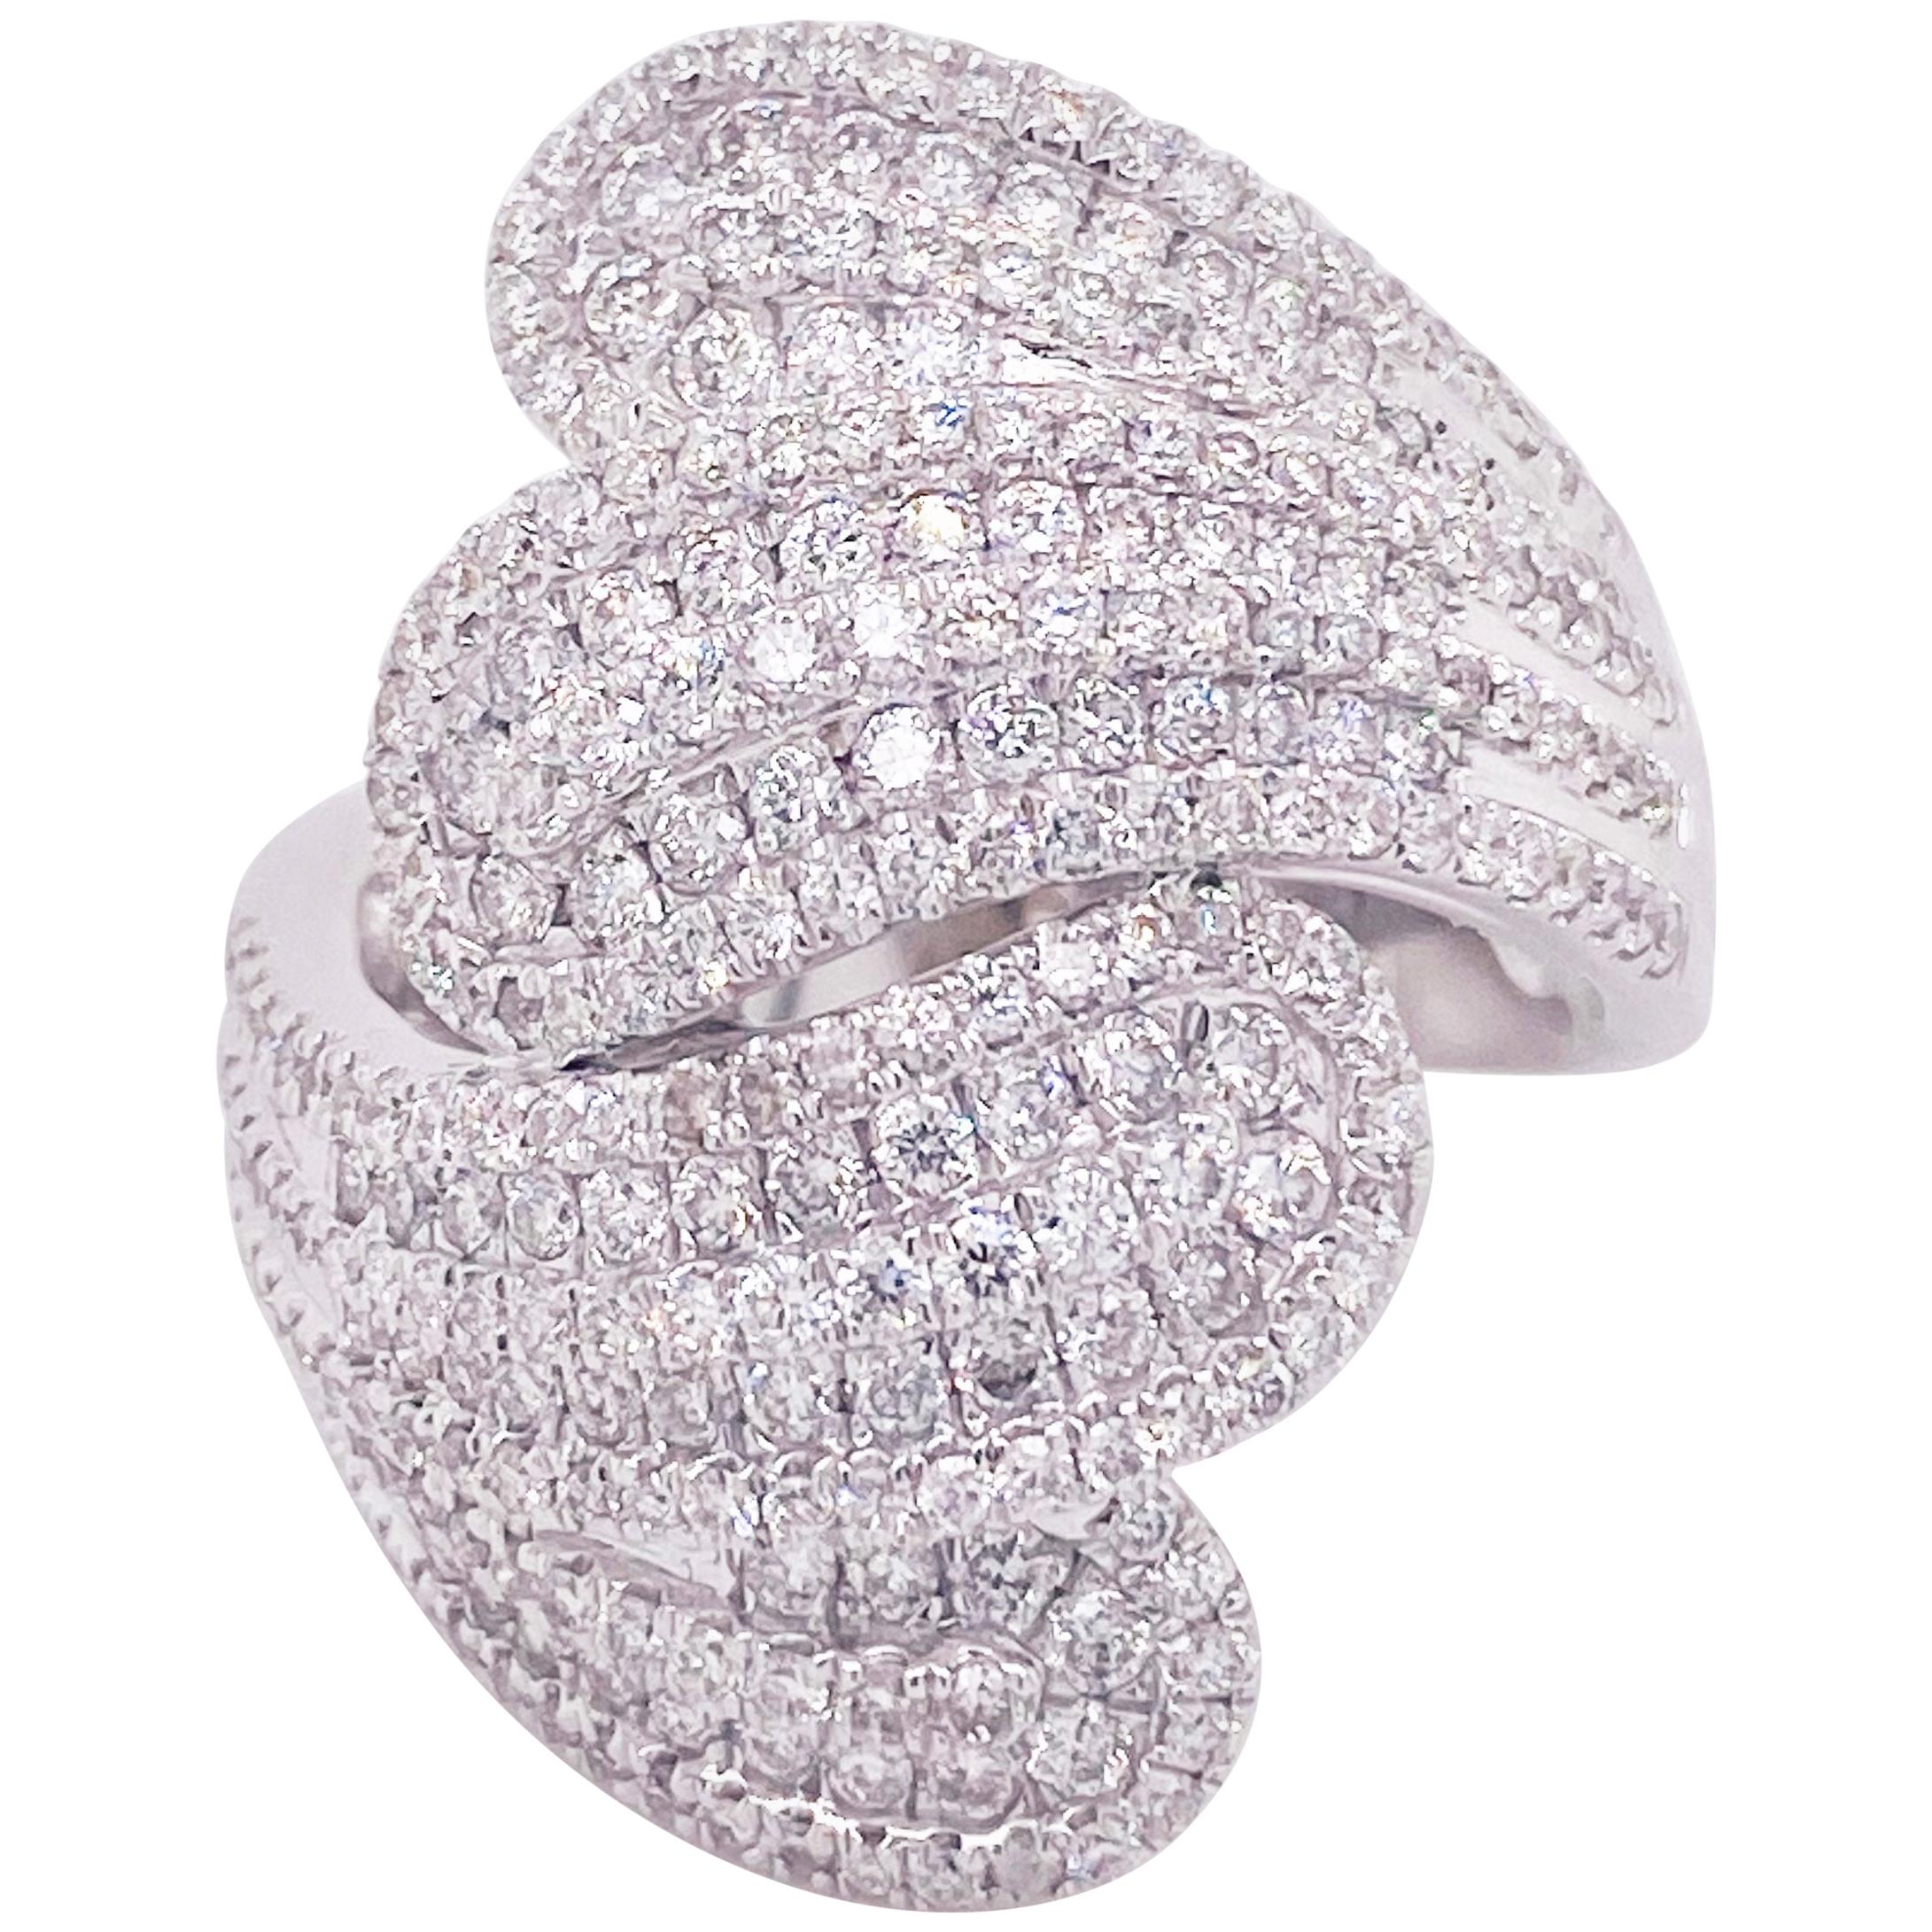 Diamond Statement Ring, Lush 14 Karat White Gold, Bombe, Fashion Band, Bypass